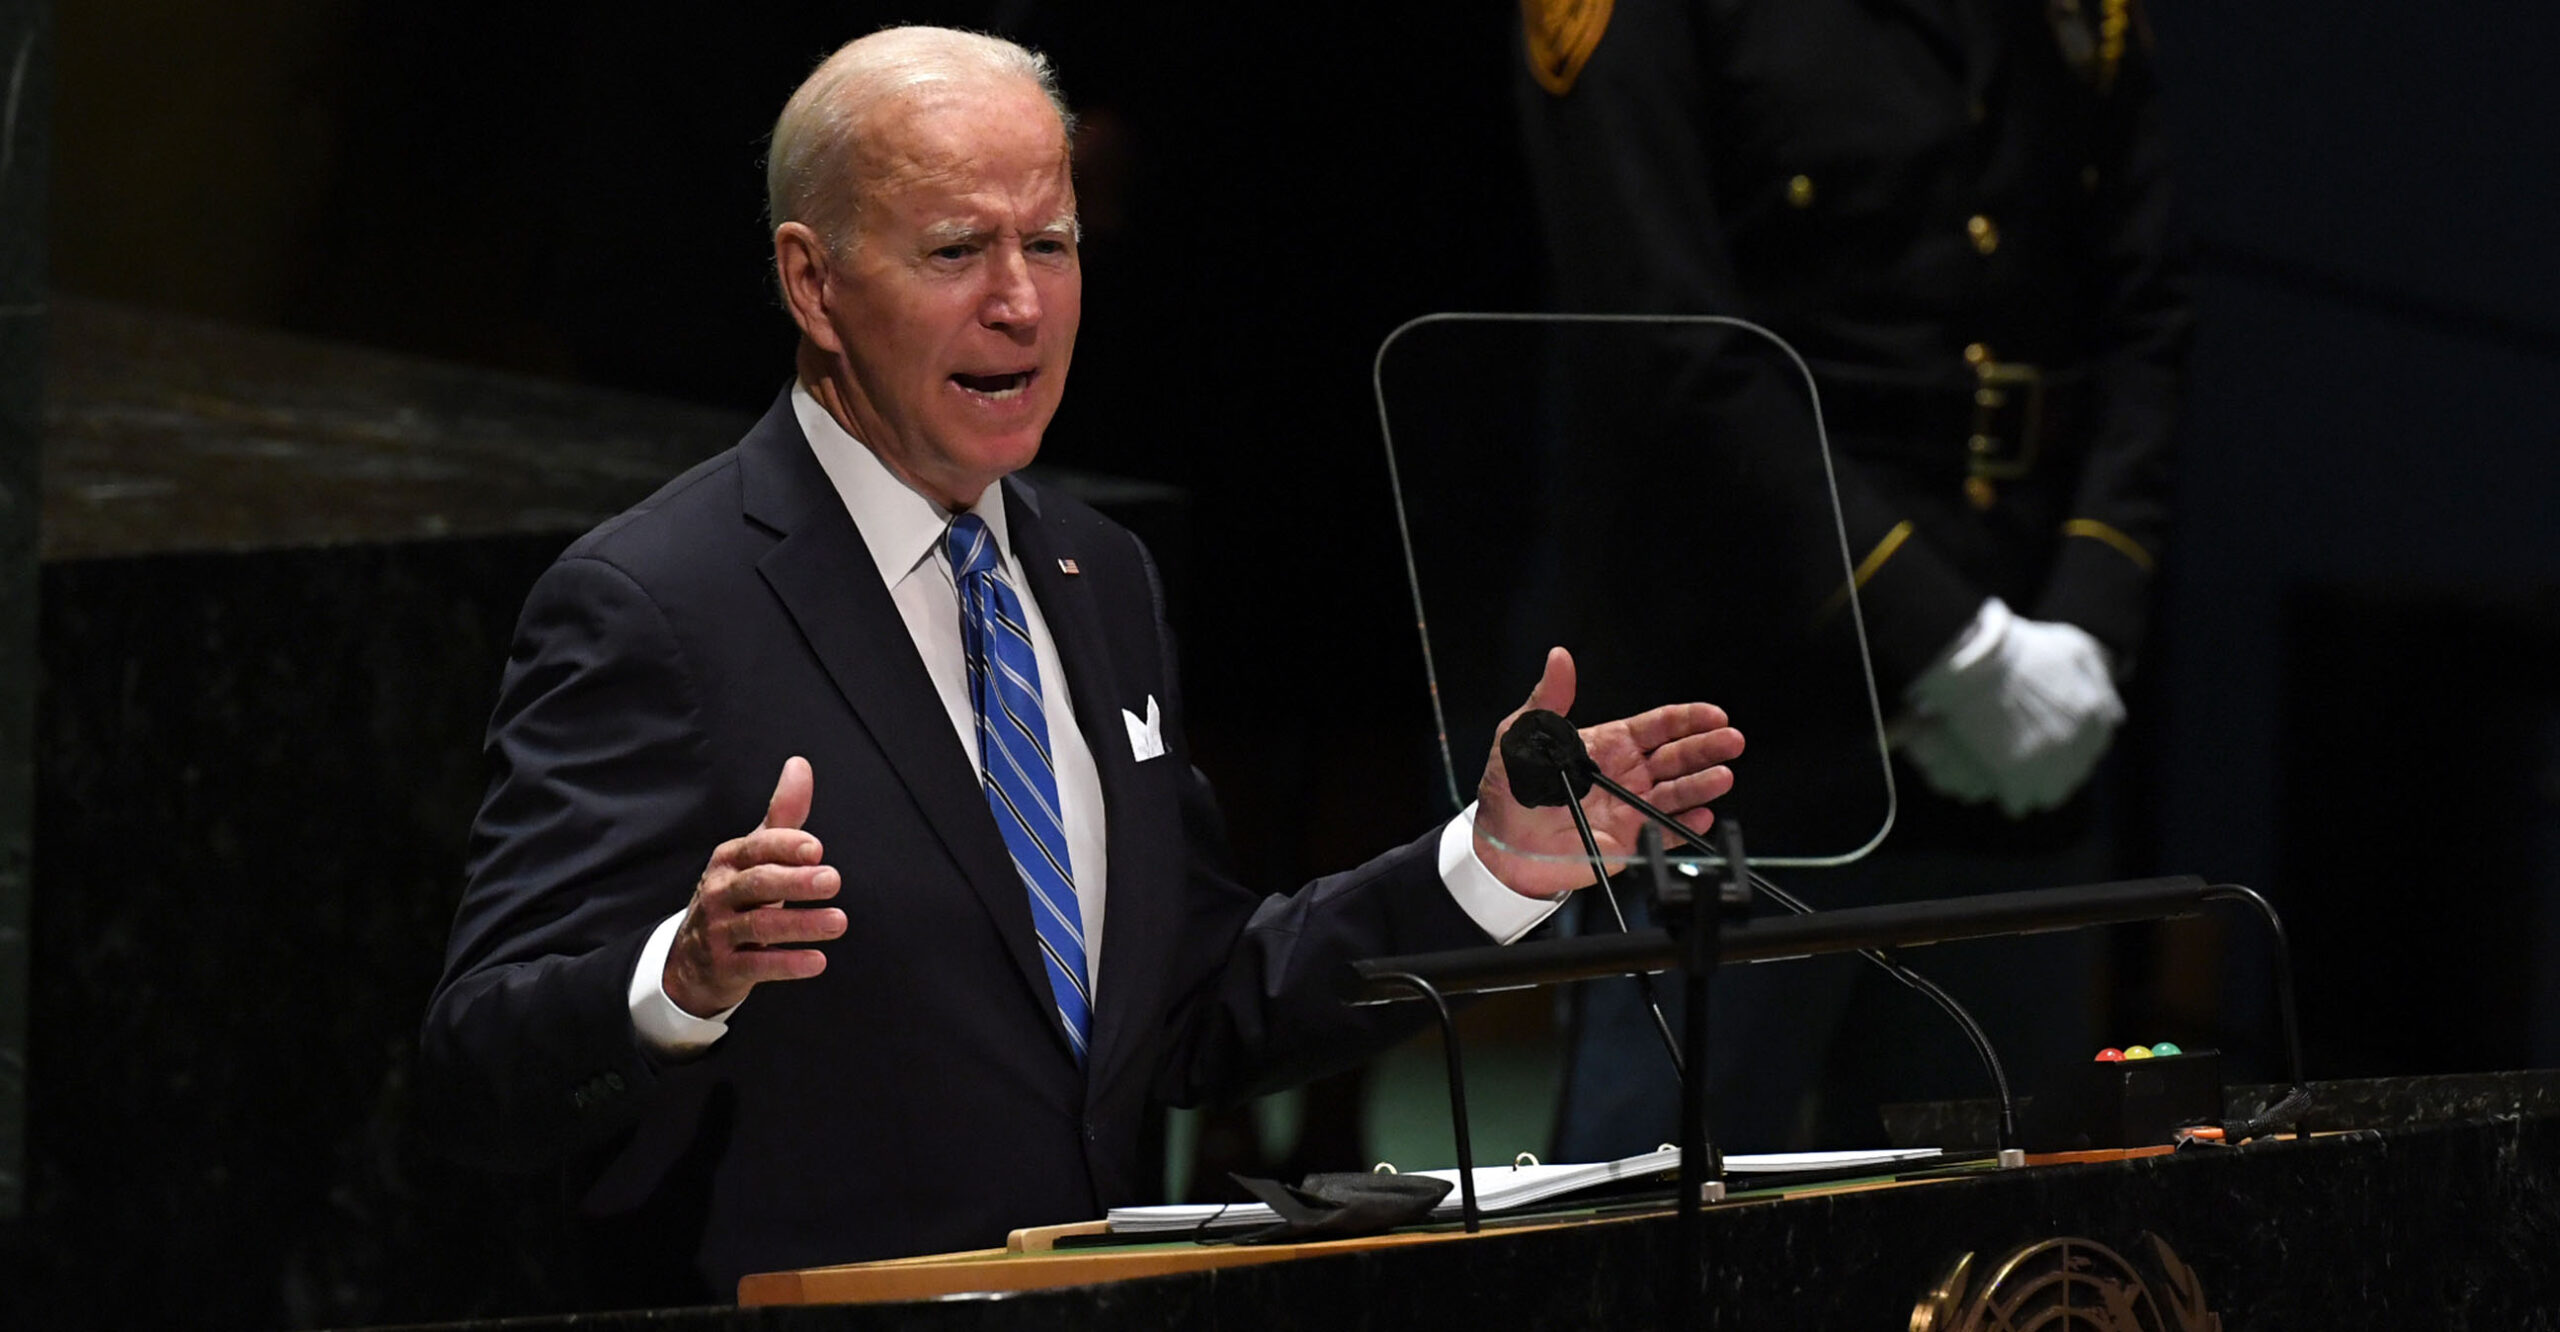 4 Takeaways From Biden’s First UN Speech